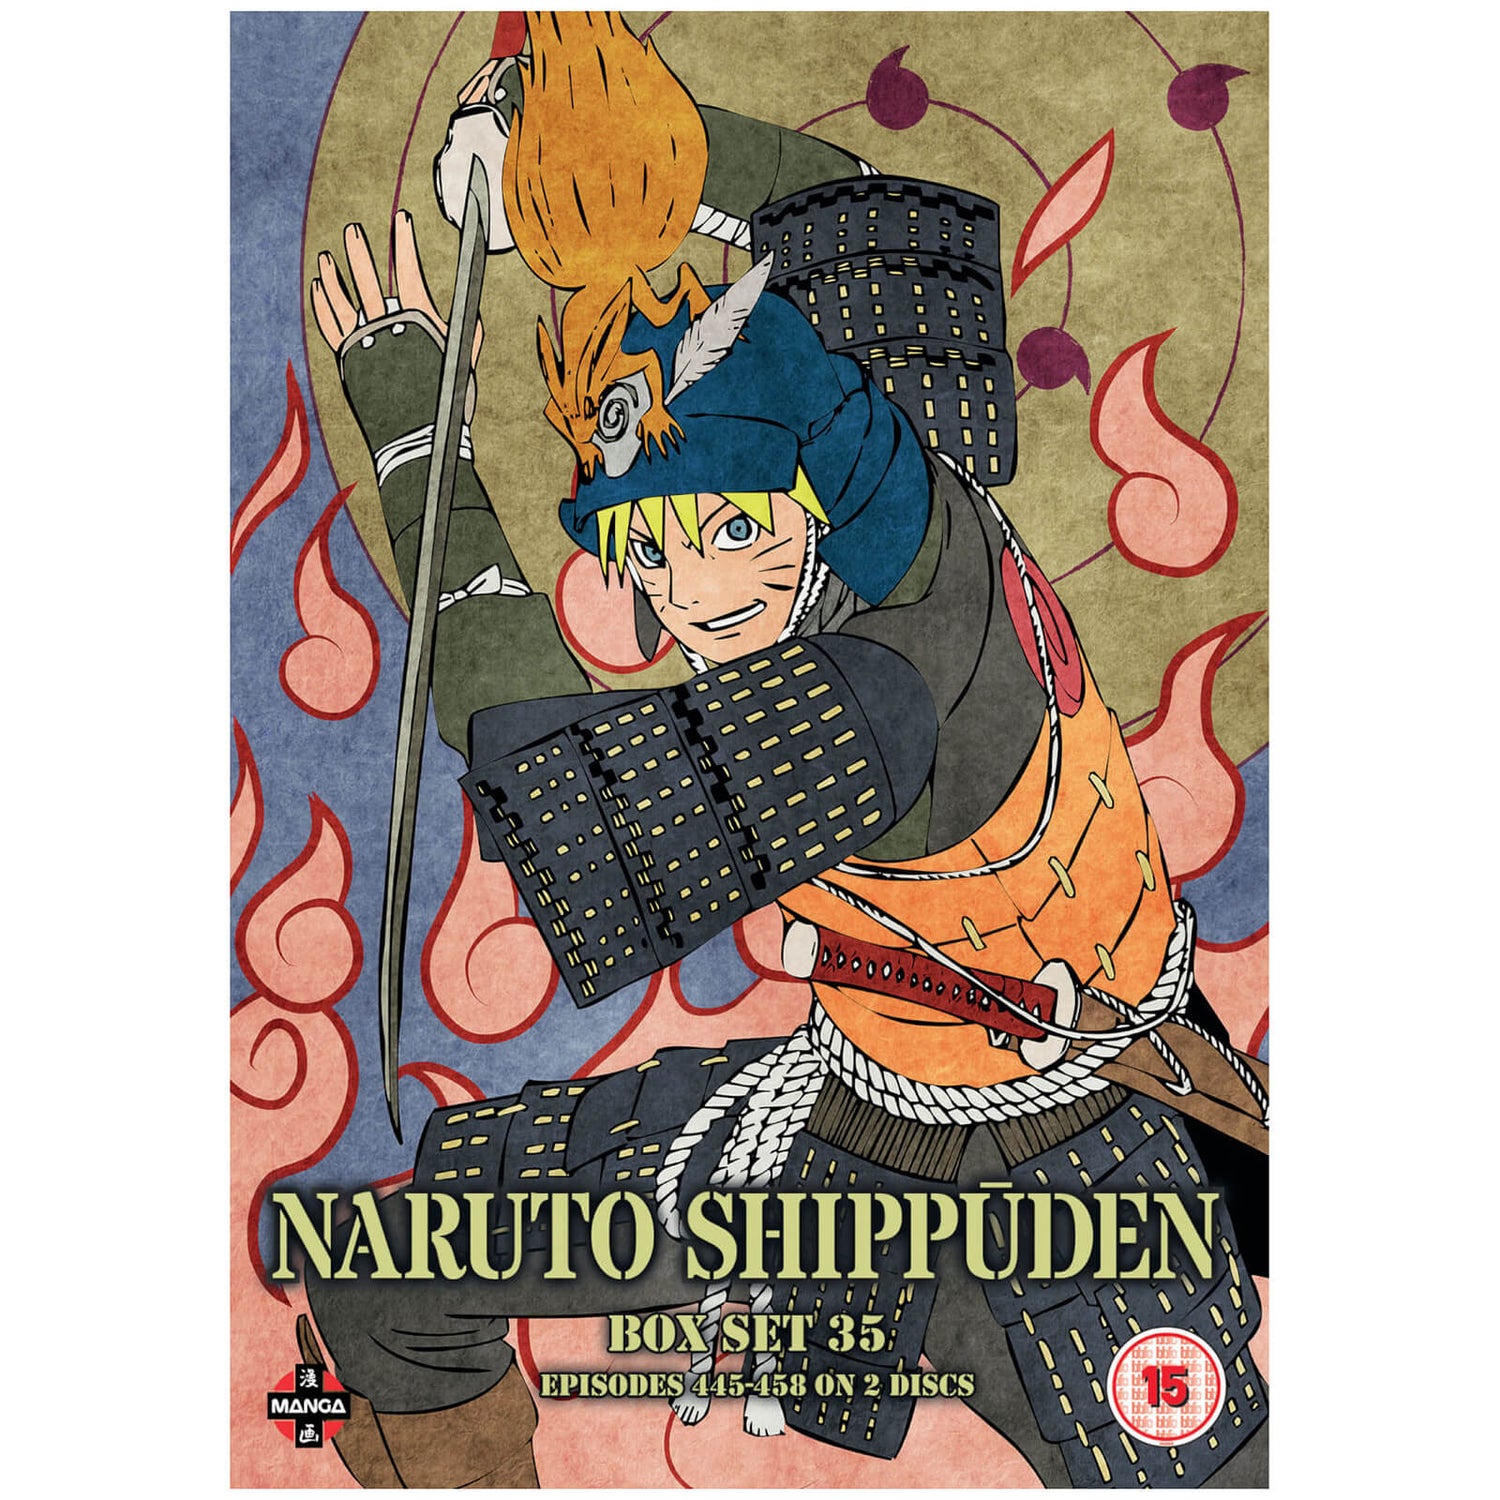 Naruto Shippuden Box 35 (Episodes 445-458)